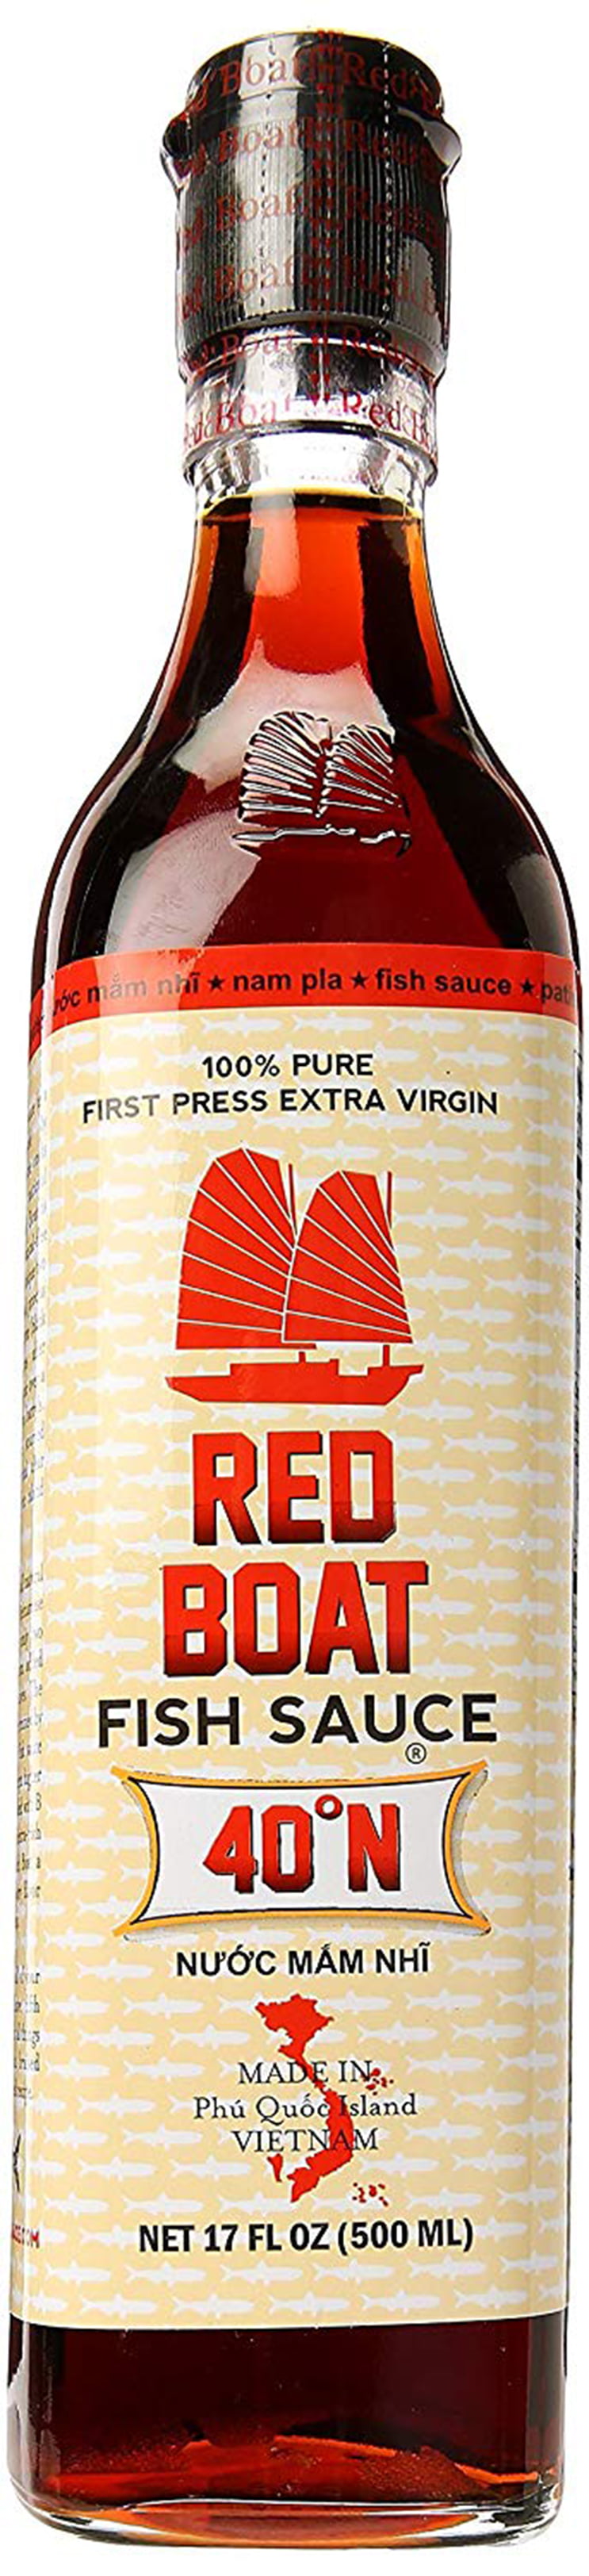 Red Boat Mắm Nêm, 250ml – Red Boat Fish Sauce